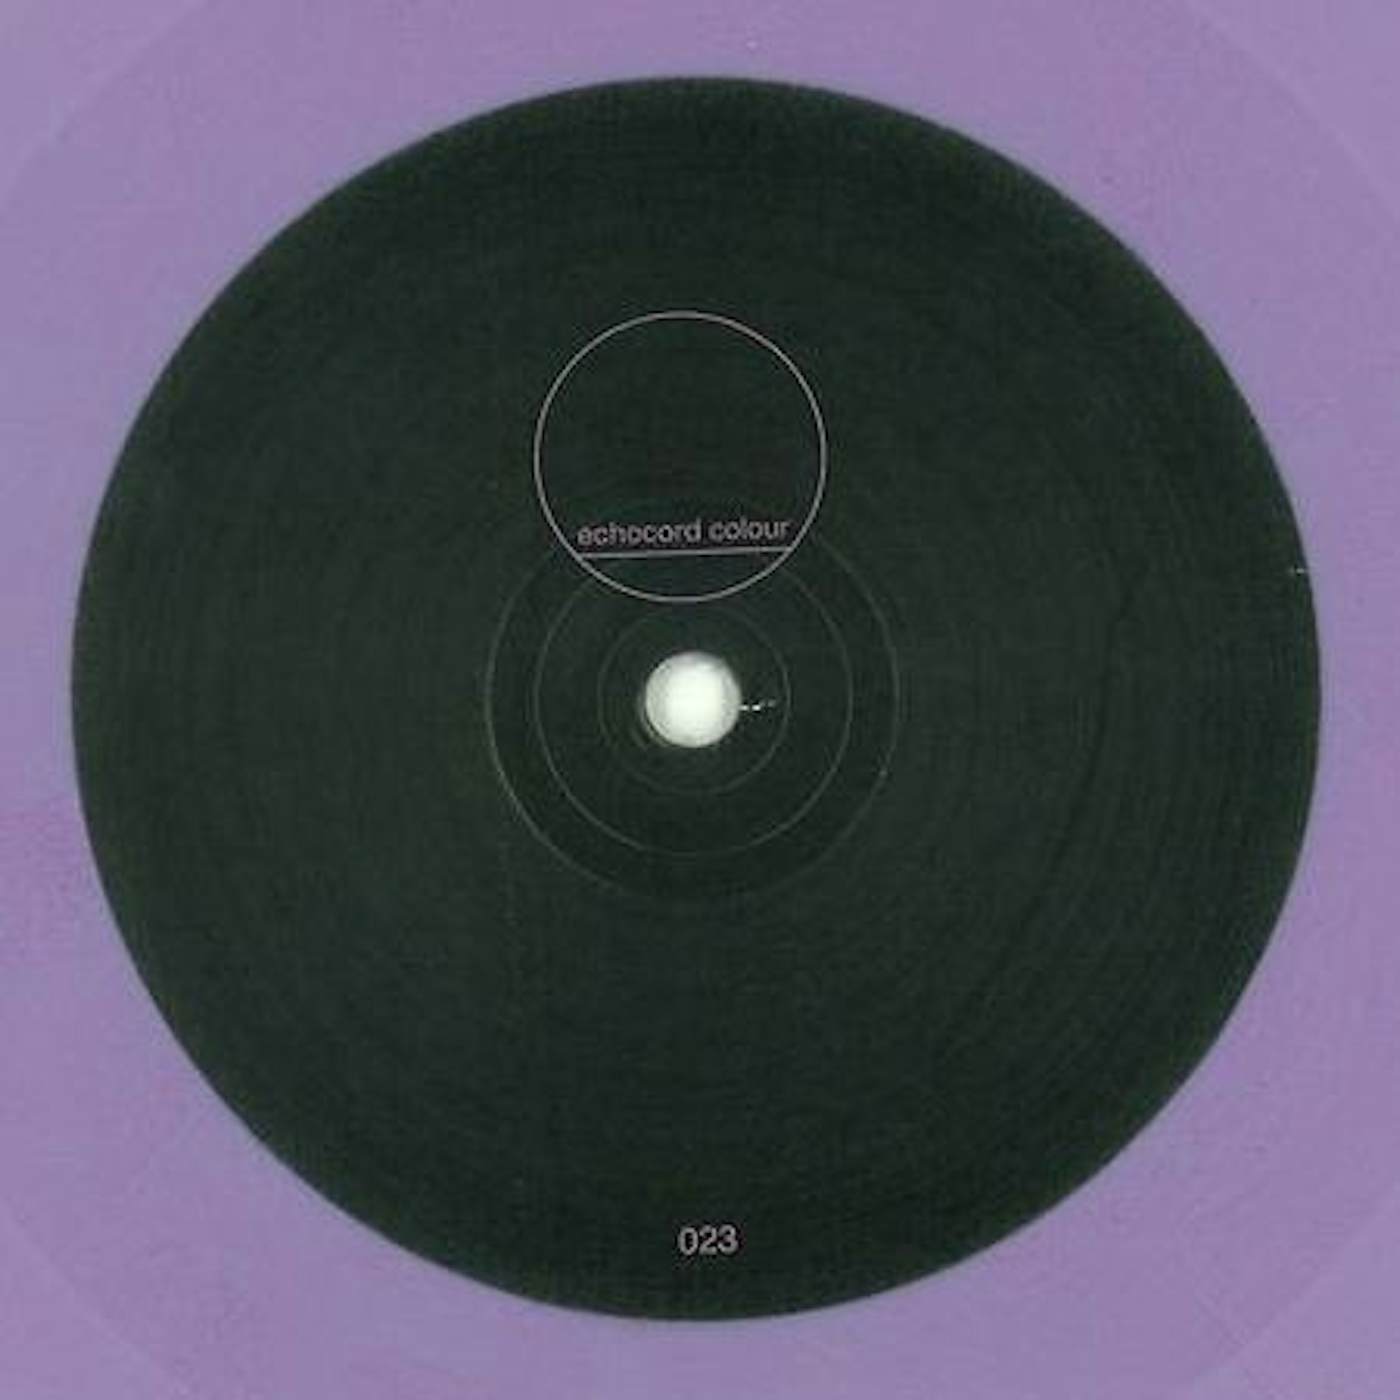 Mike Dehnert Roulement Vinyl Record